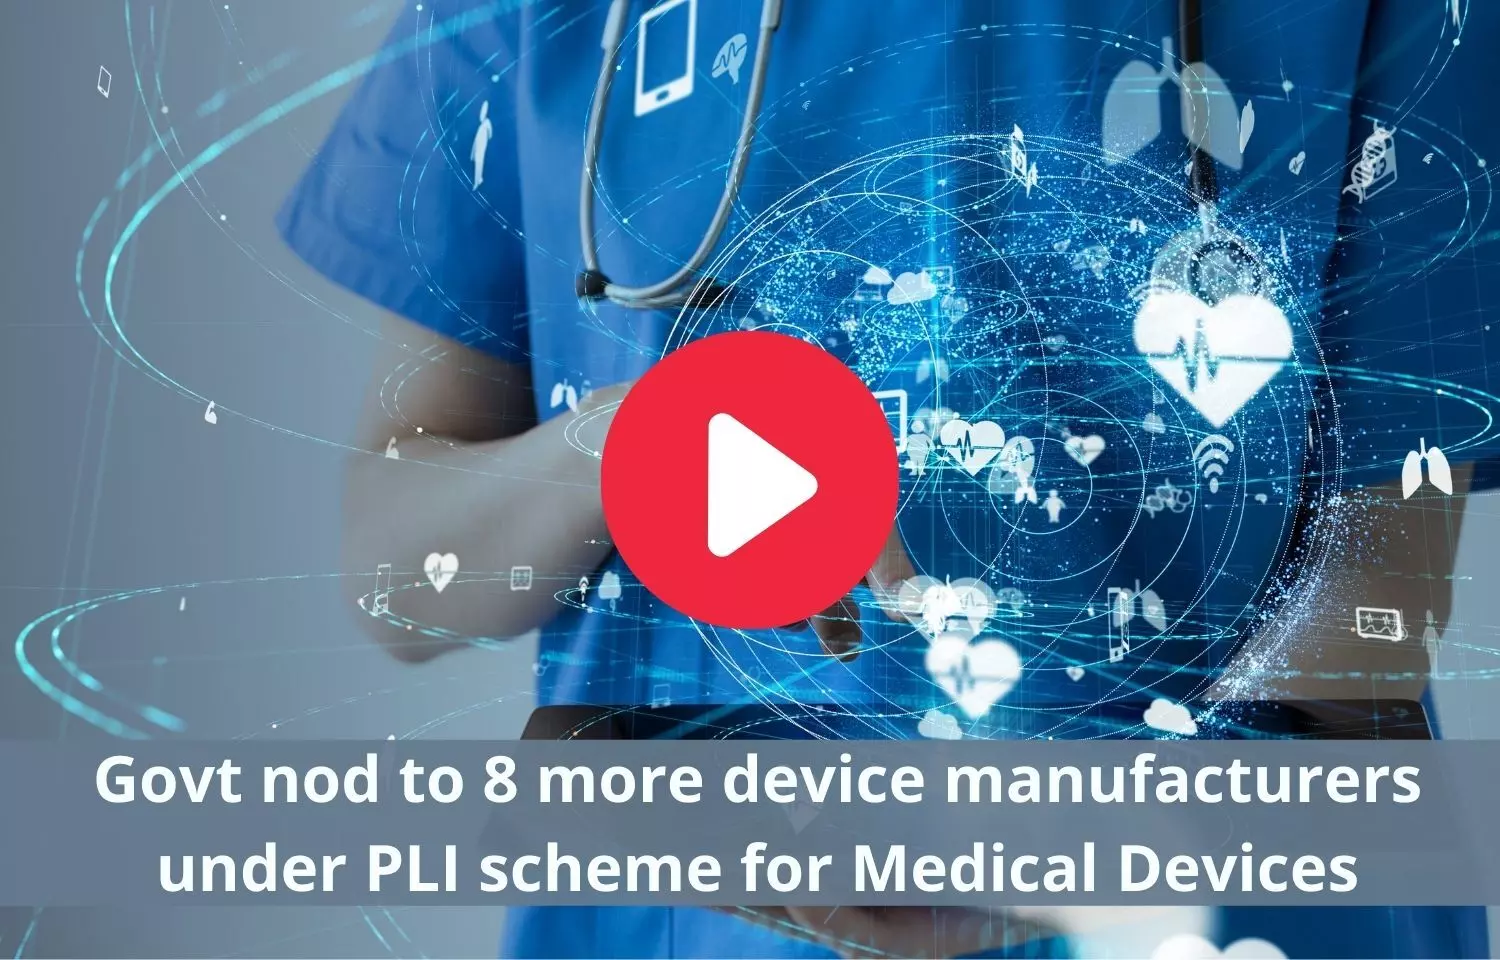 Govt approves 8 more device manufacturers under PLI scheme for Medical Devices